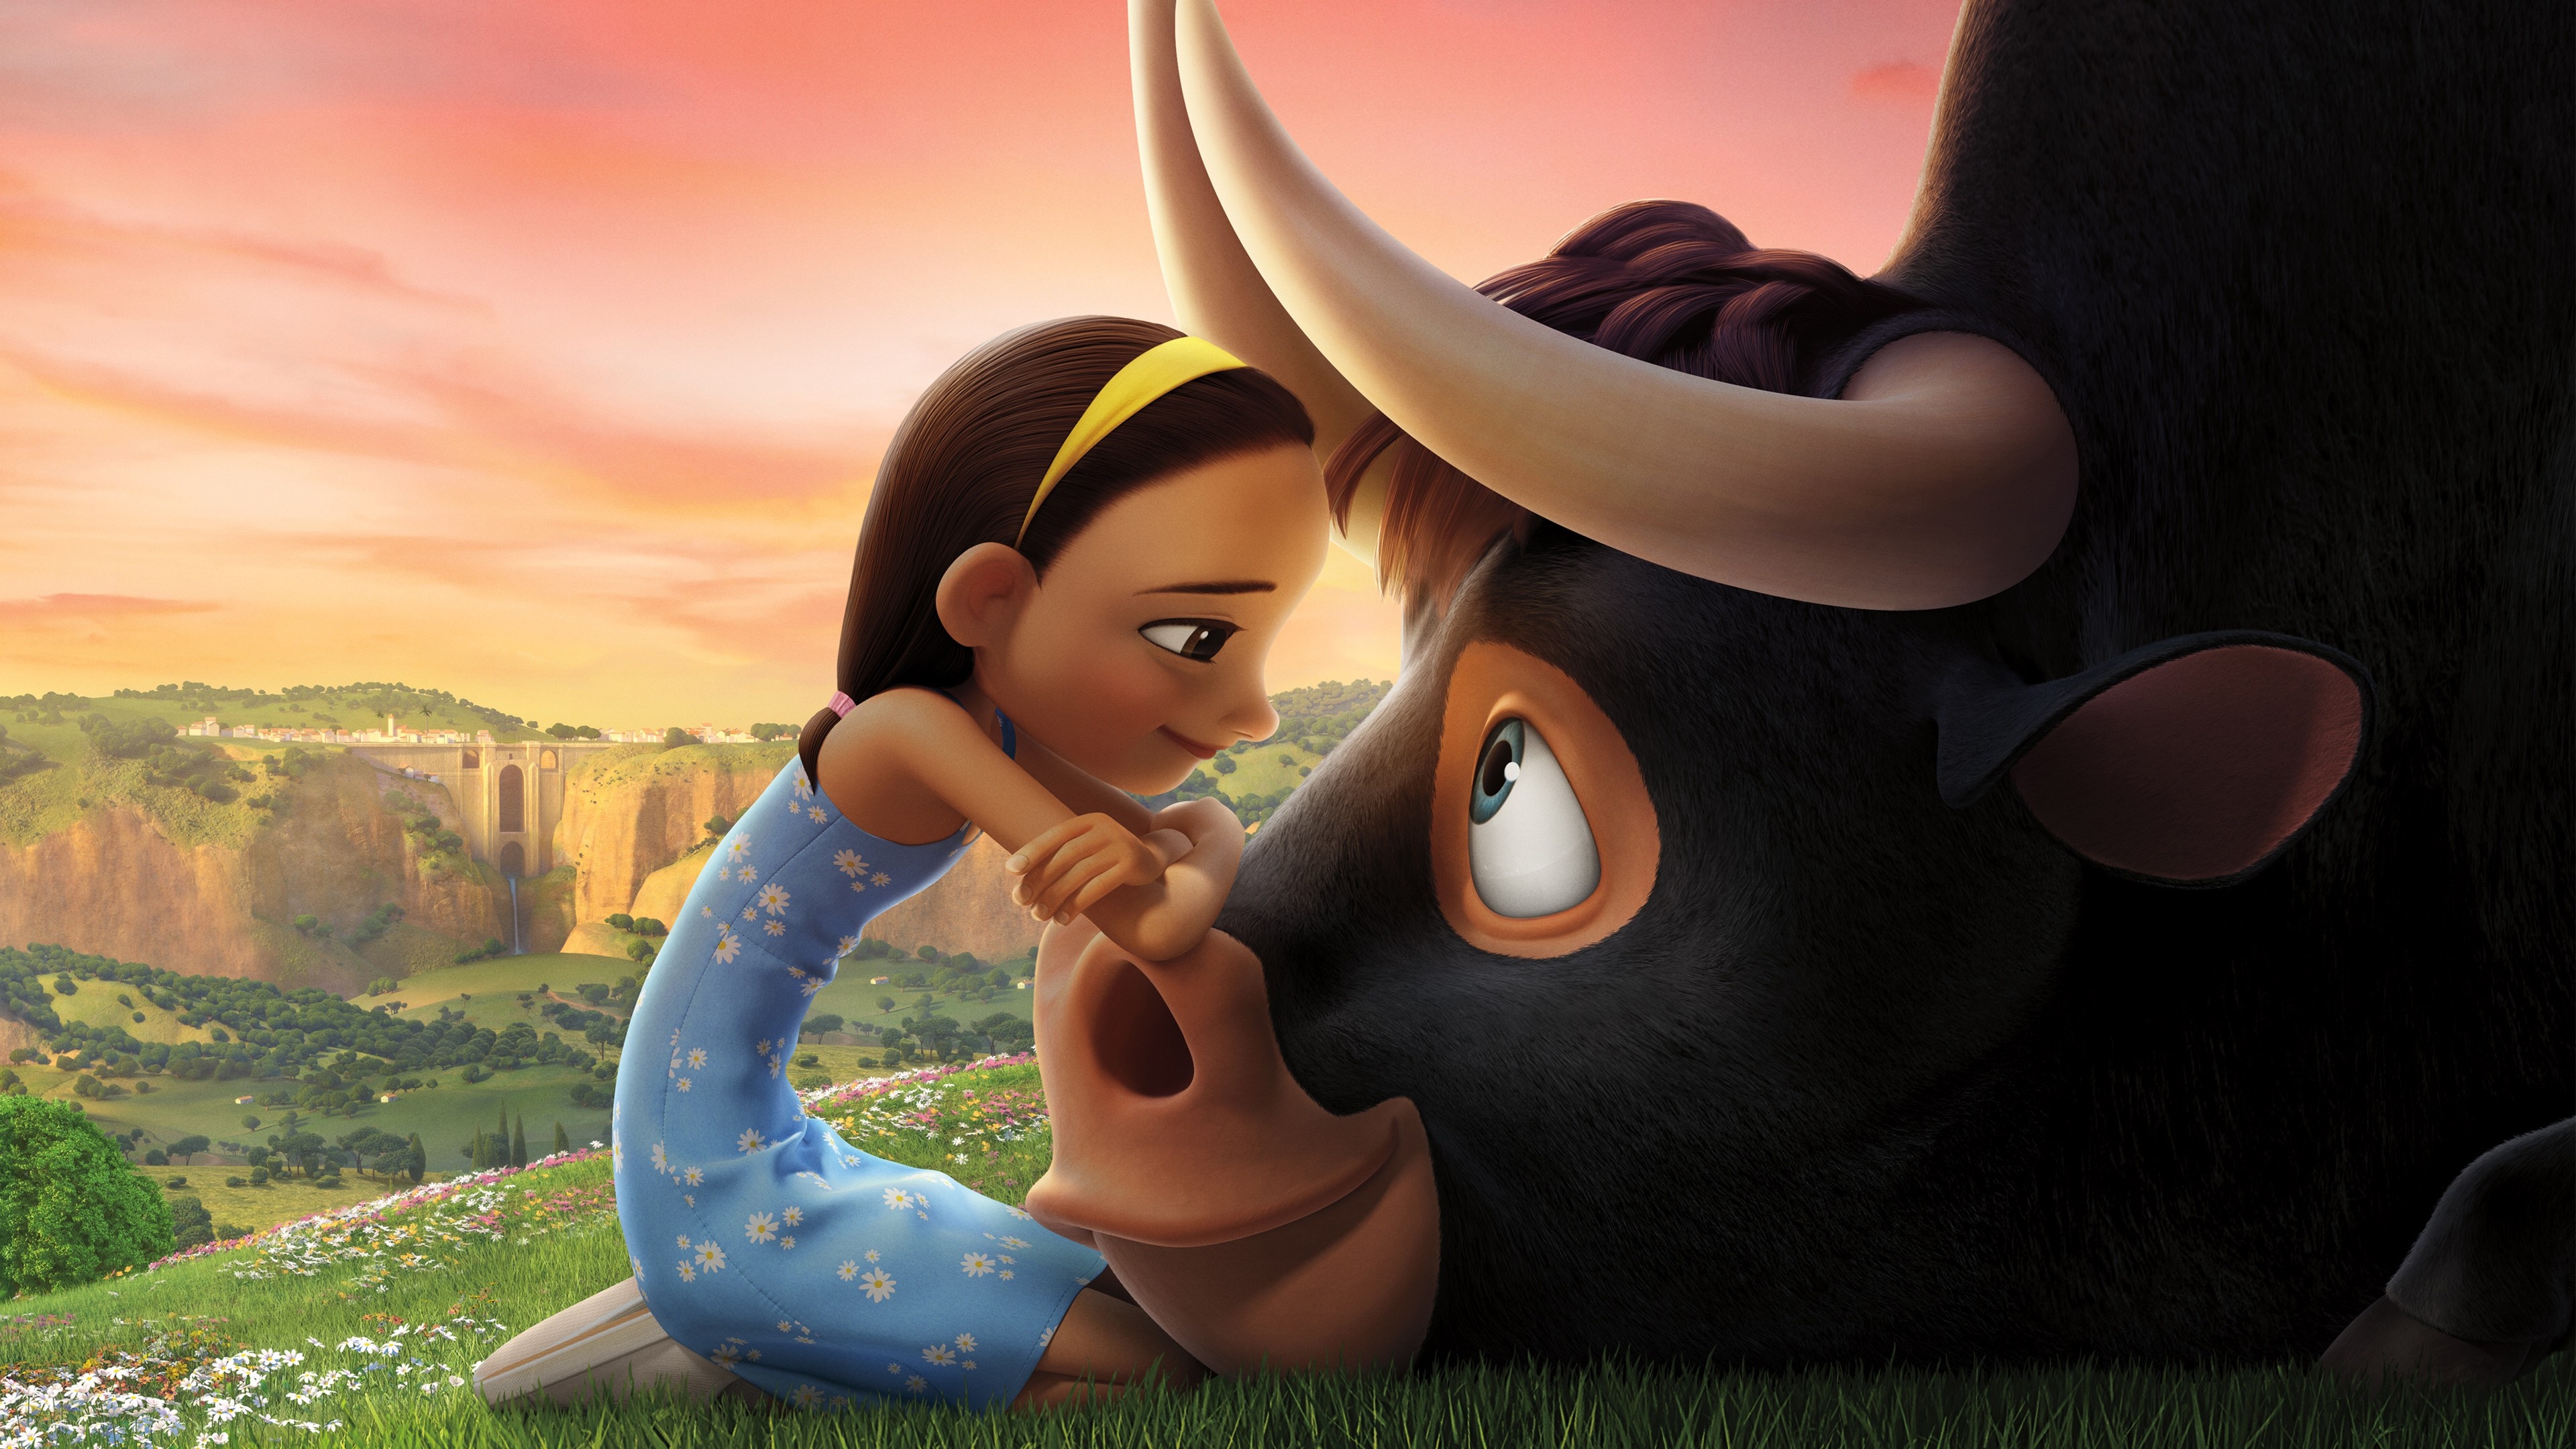 Ferdinand animation, HD download, Movie wallpapers, 3840x2160 4K Desktop